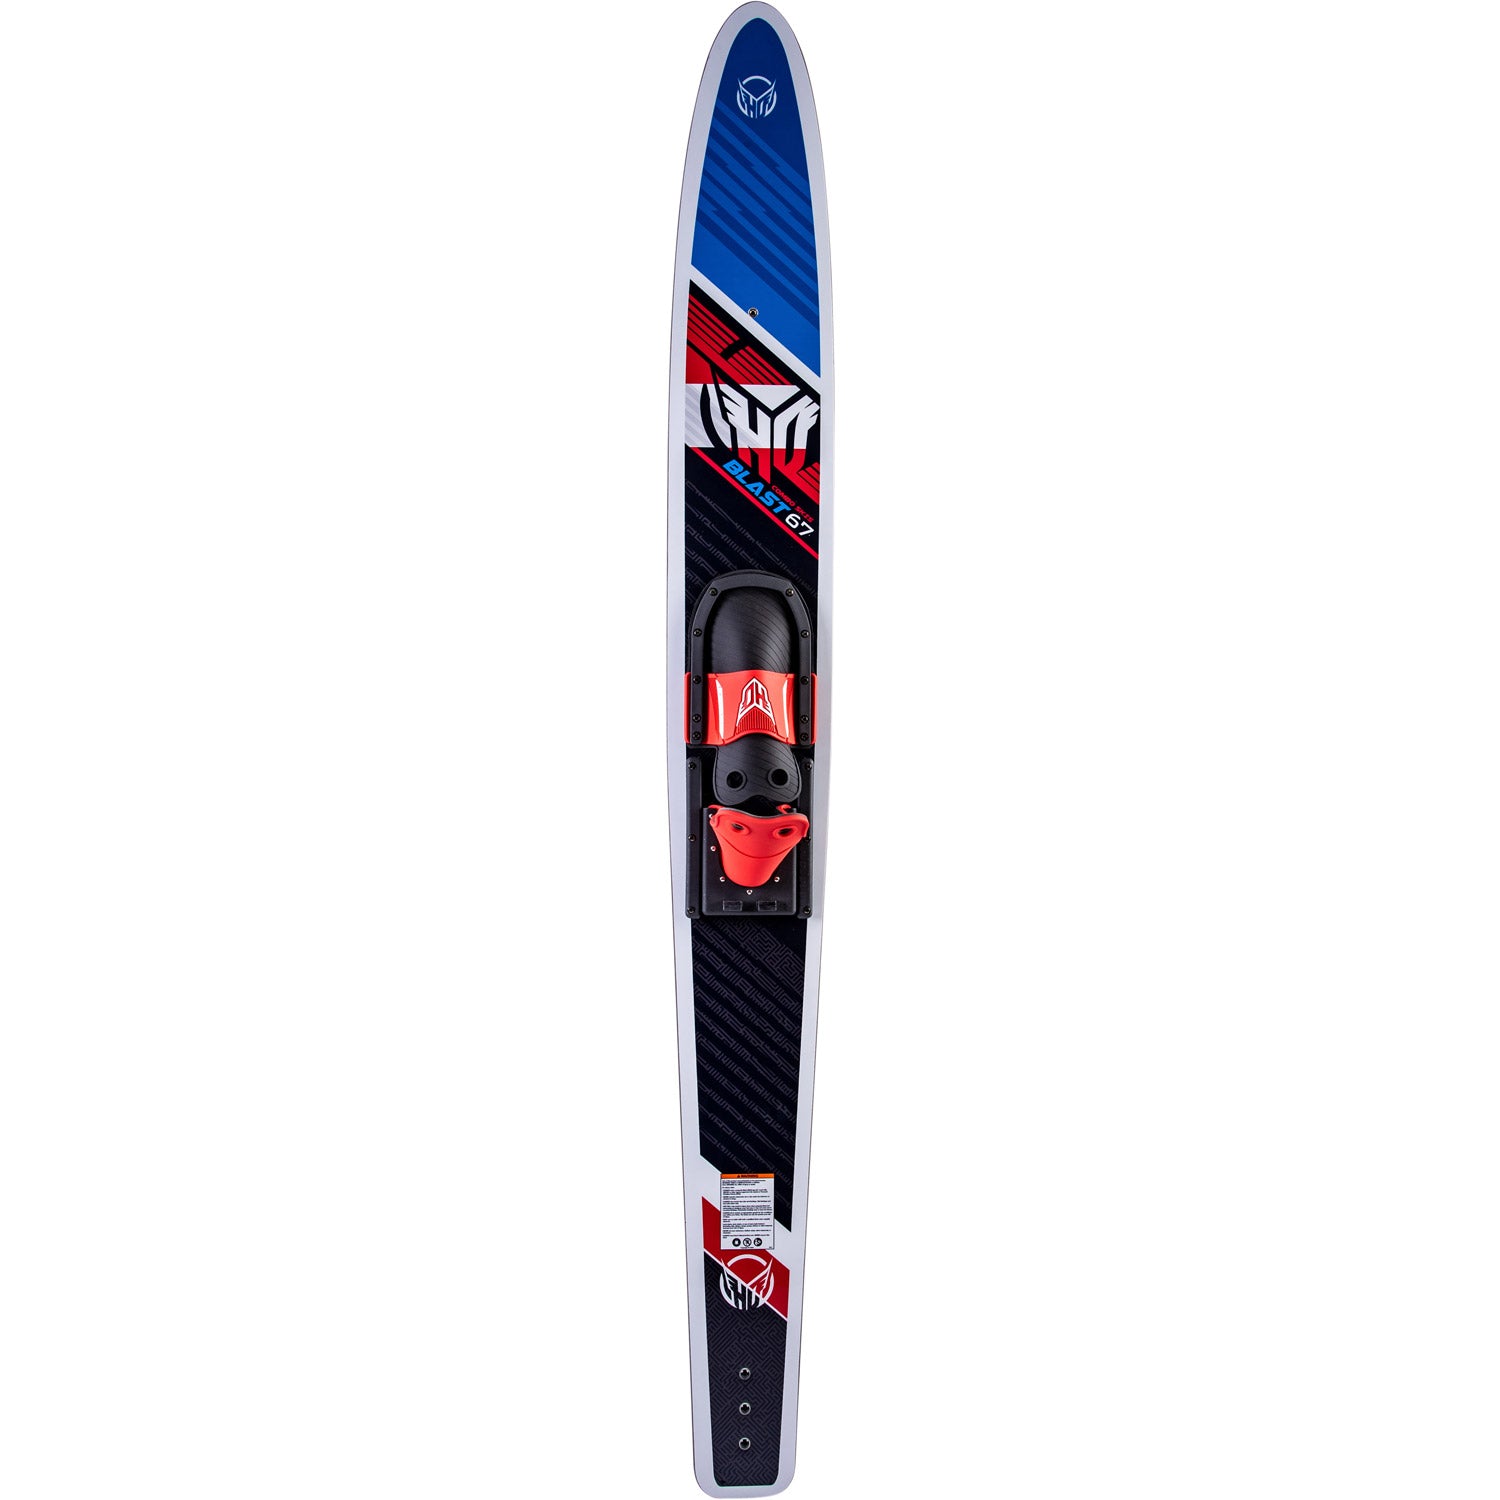 Blast Combo Skis Small w/ Horseshoe Binding 2022